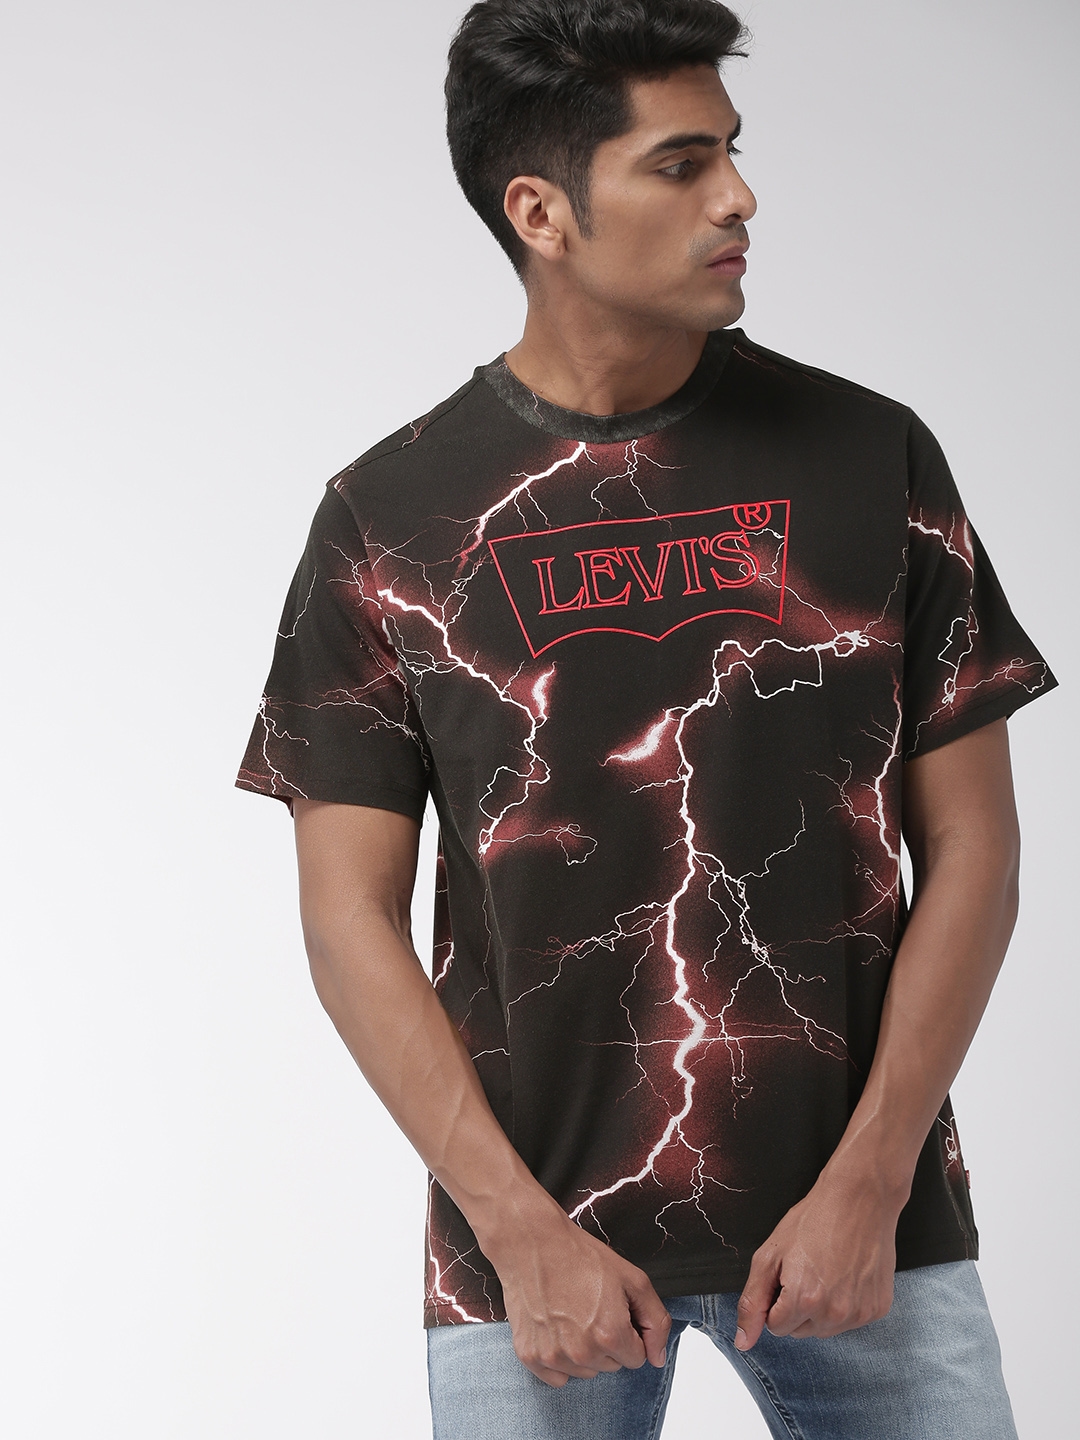 stranger things levis shirt